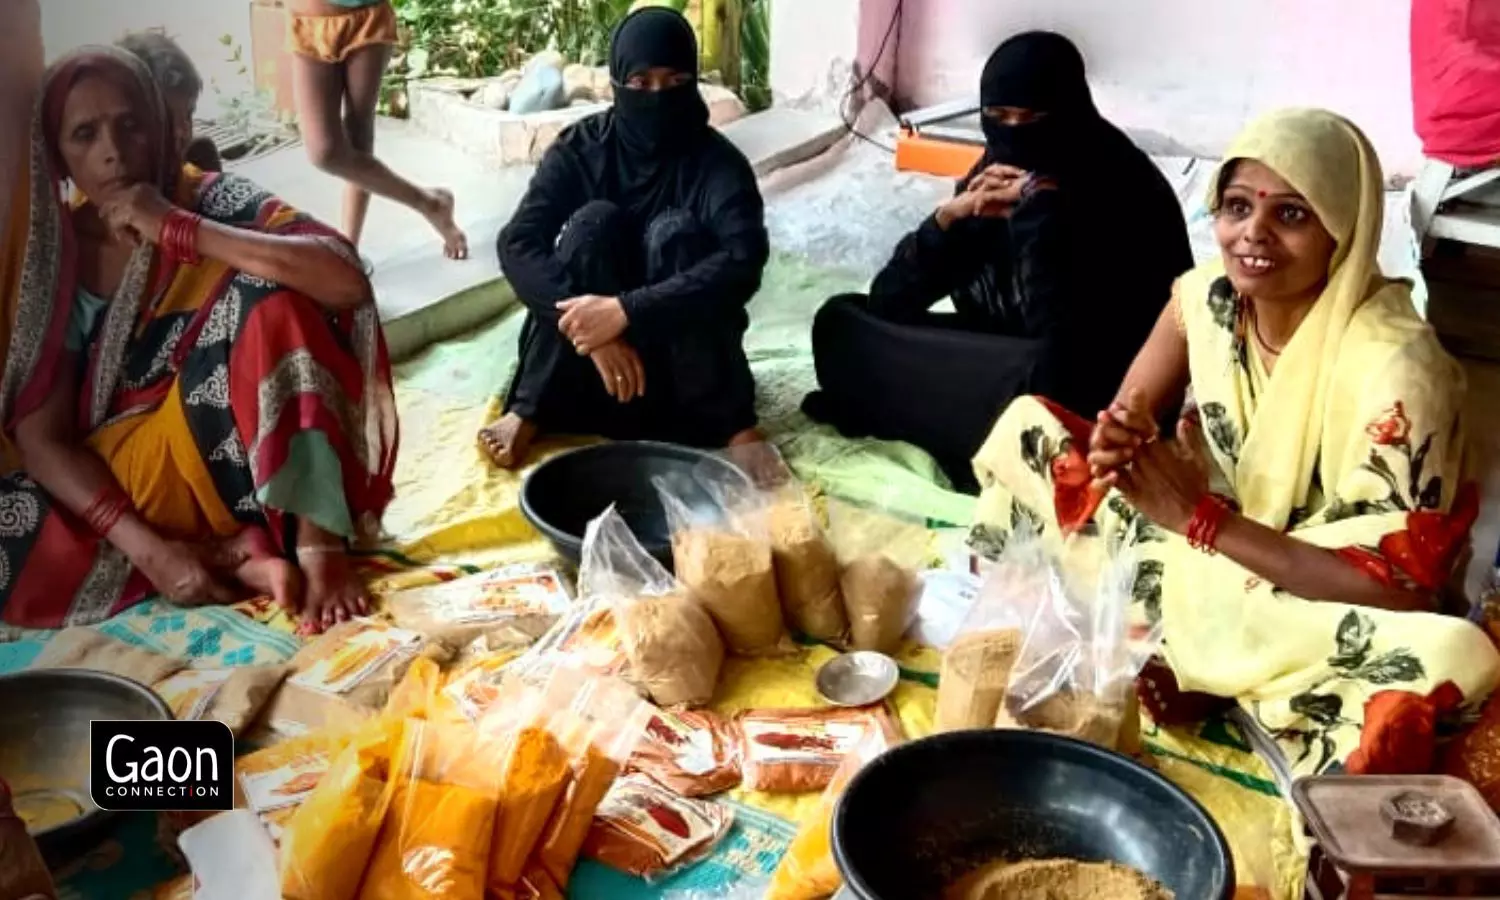 Rural women add spice to their livelihoods